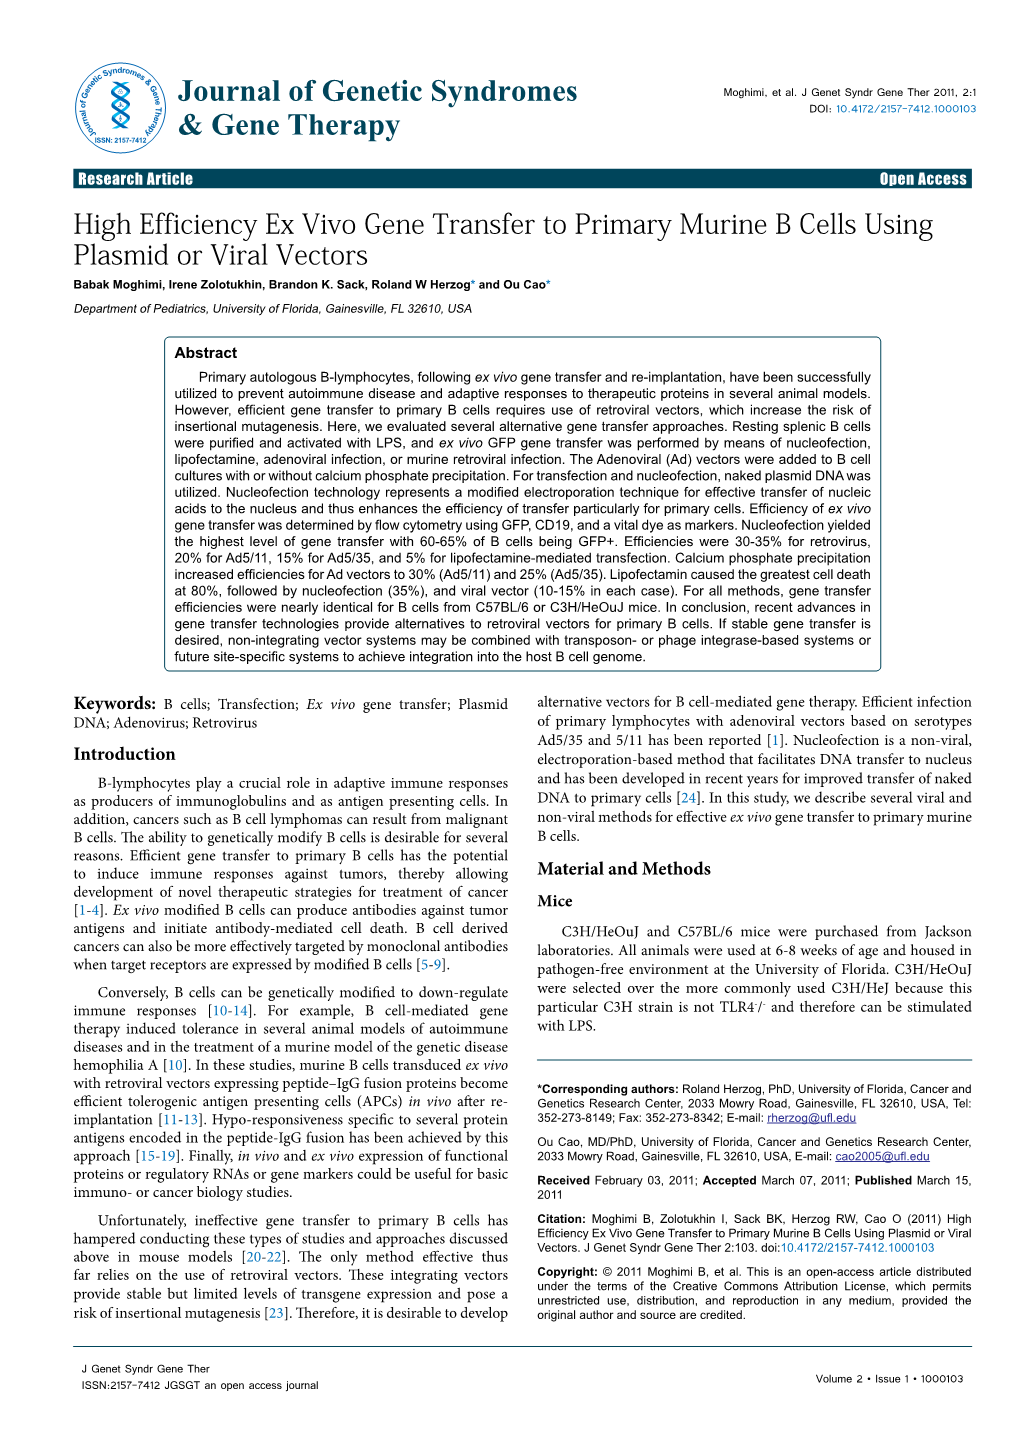 High Efficiency Ex Vivo Gene Transfer to Primary Murine B Cells Using Plasmid Or Viral Vectors Babak Moghimi, Irene Zolotukhin, Brandon K